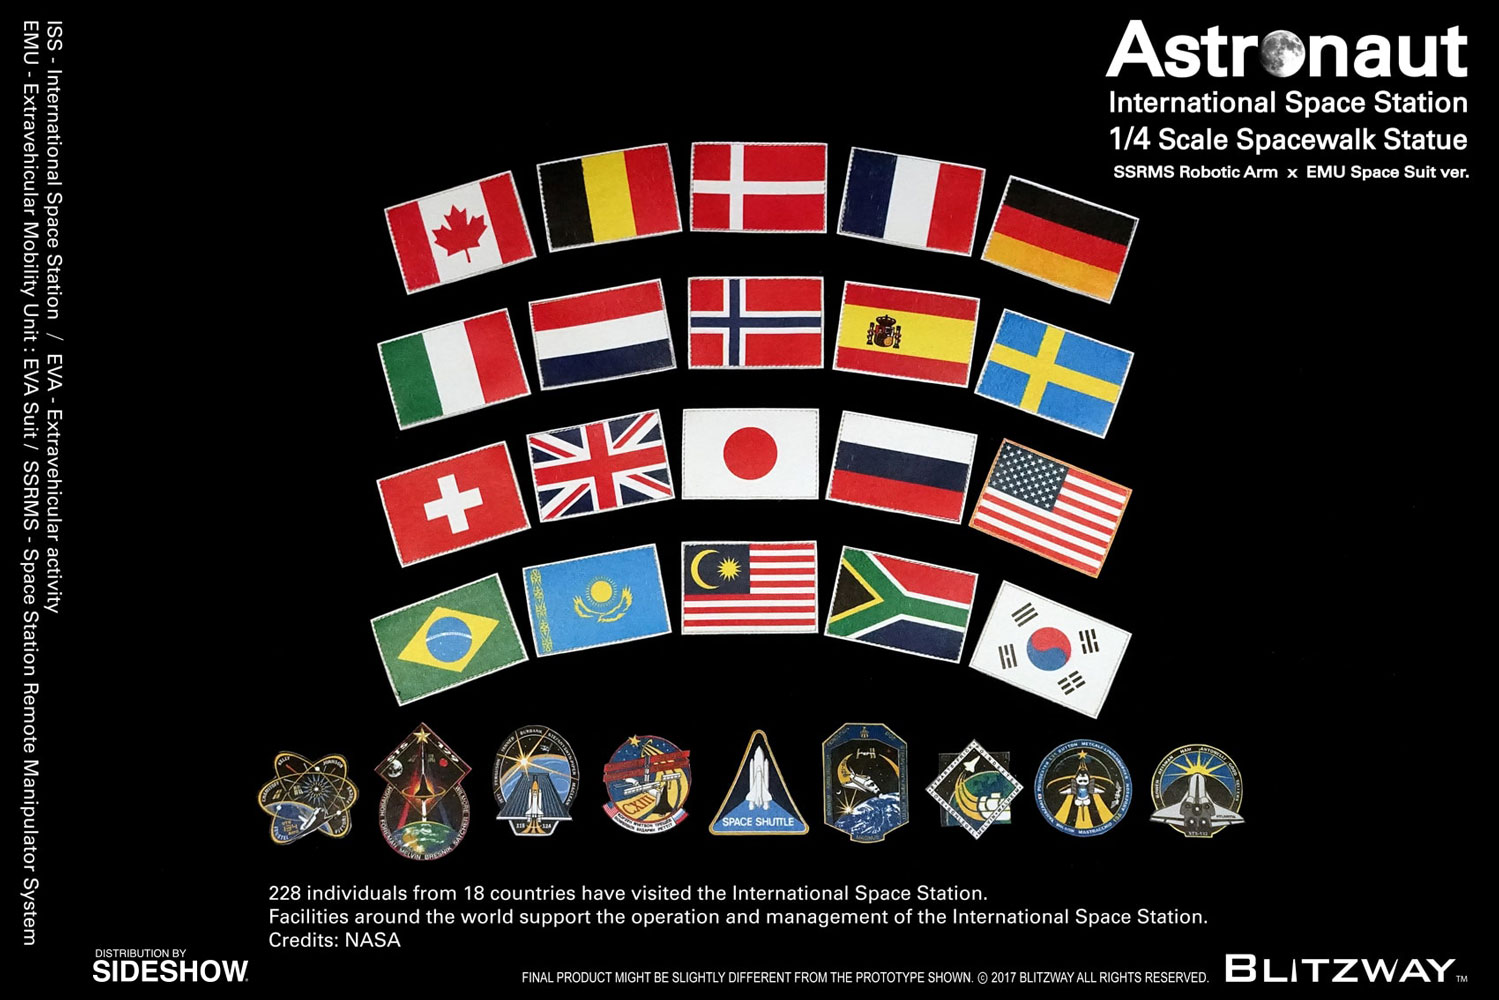 astronaut-iss-emu-version-quarter-scale-figure-blitzway-903319-33.jpg